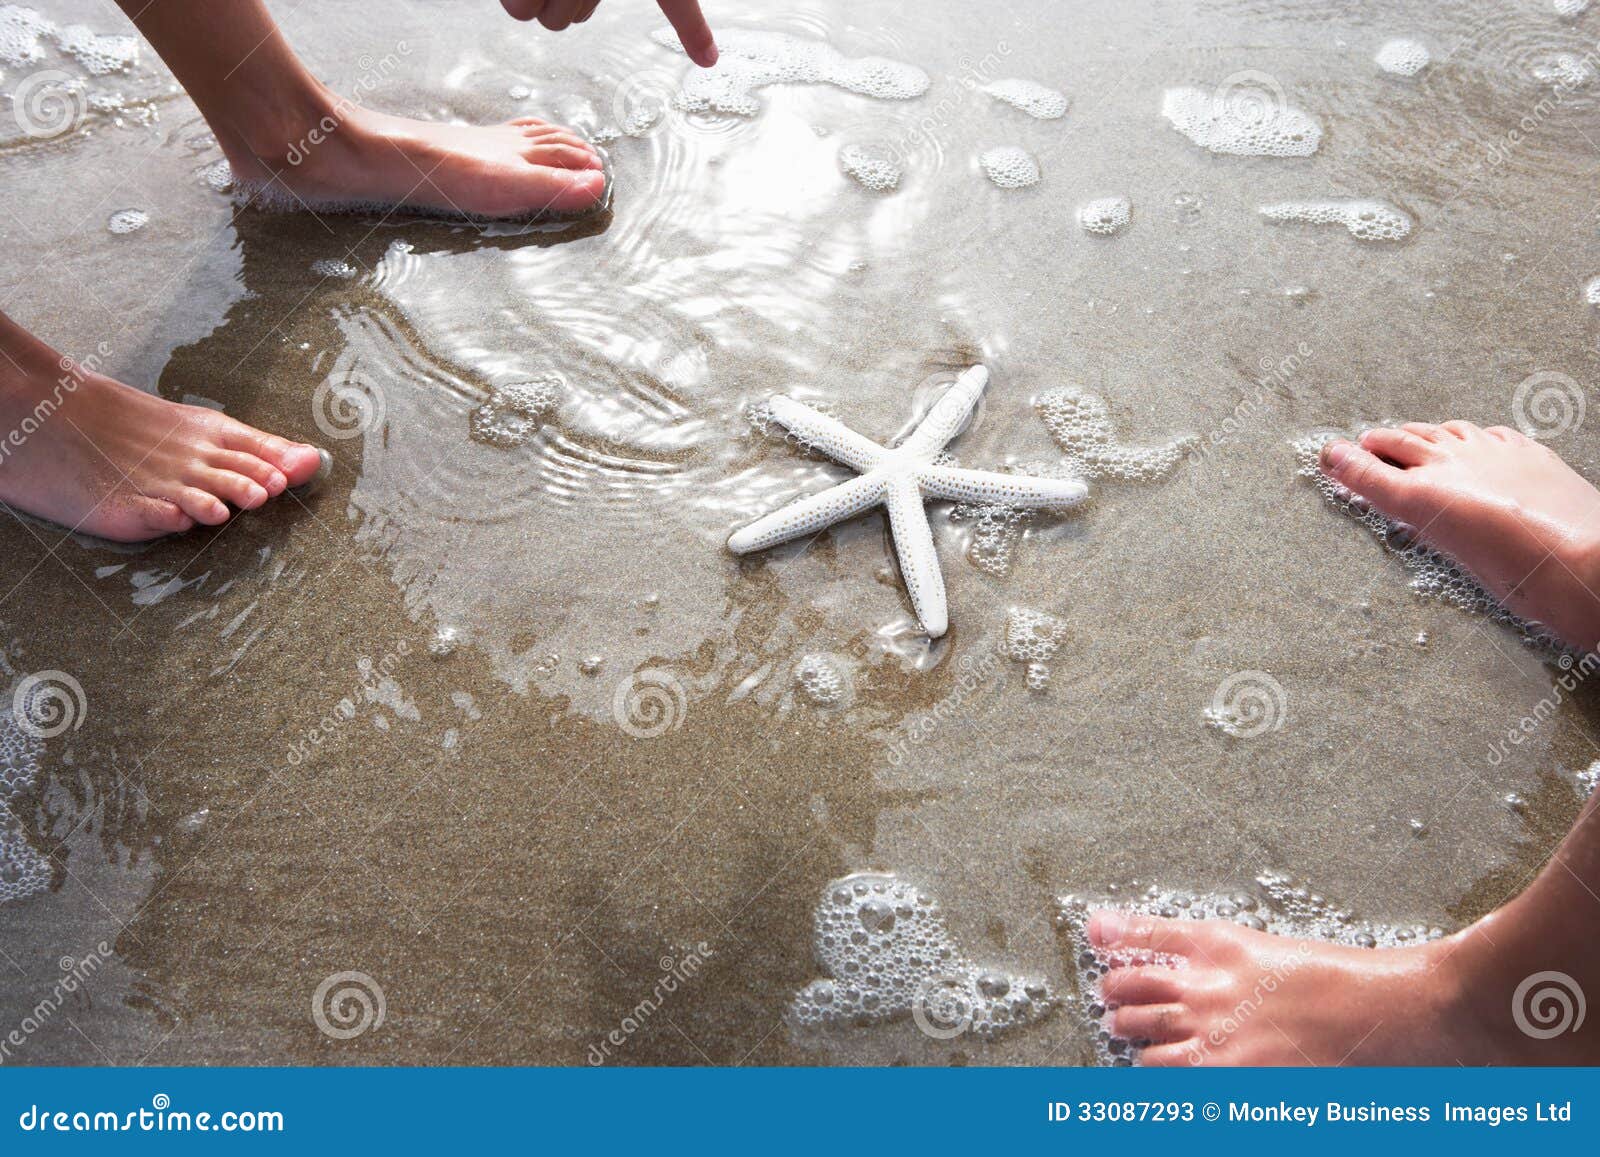 children discovering starfish on beach